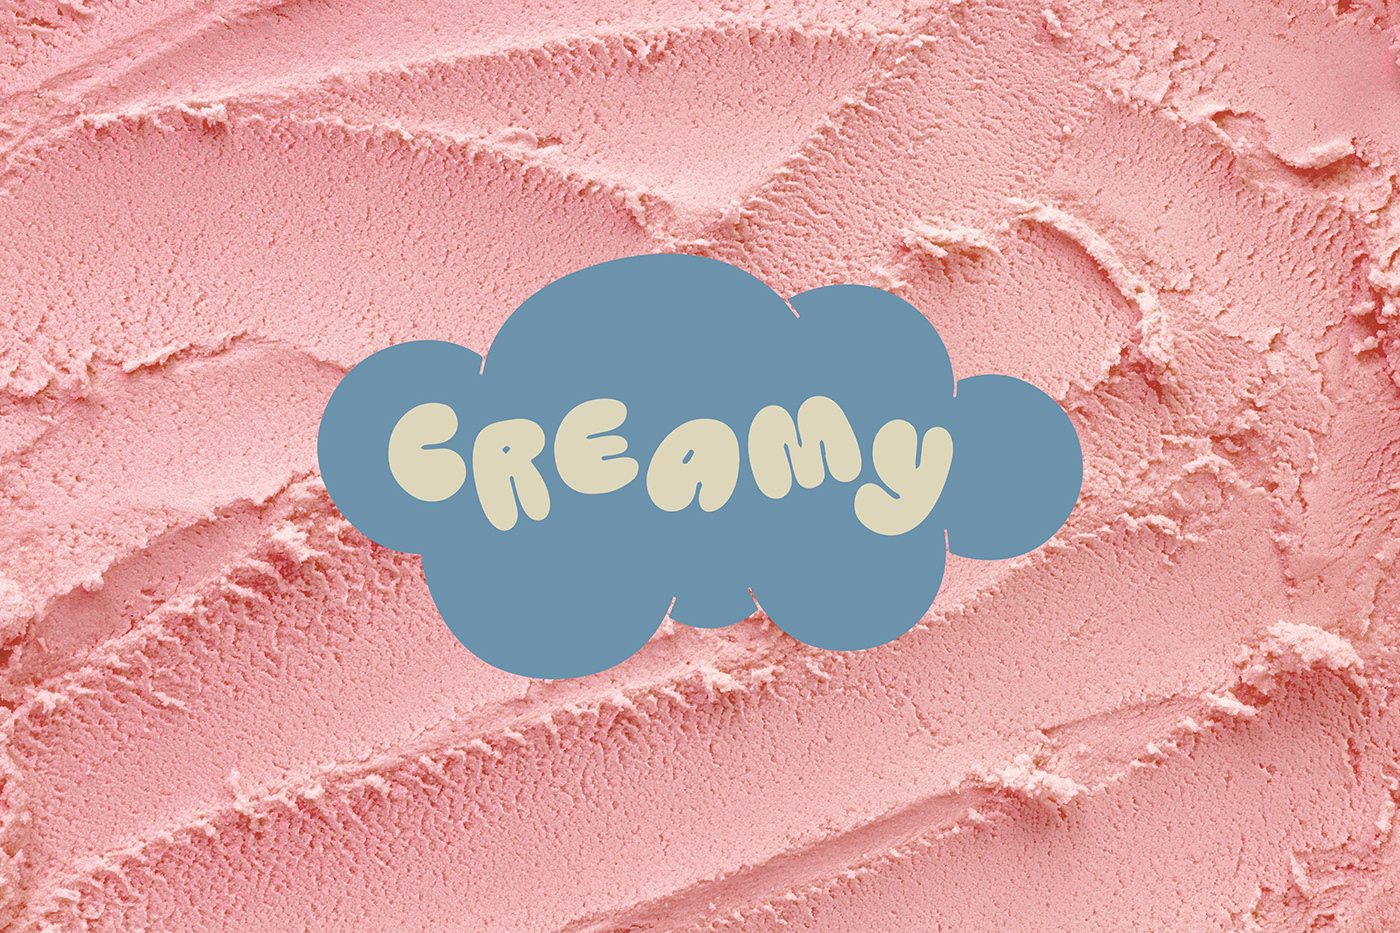 social media sorveteria ice cream shop visual identity ice cream logo design logo sorveteria Ilustração Packaging embalagem creamy tifolio